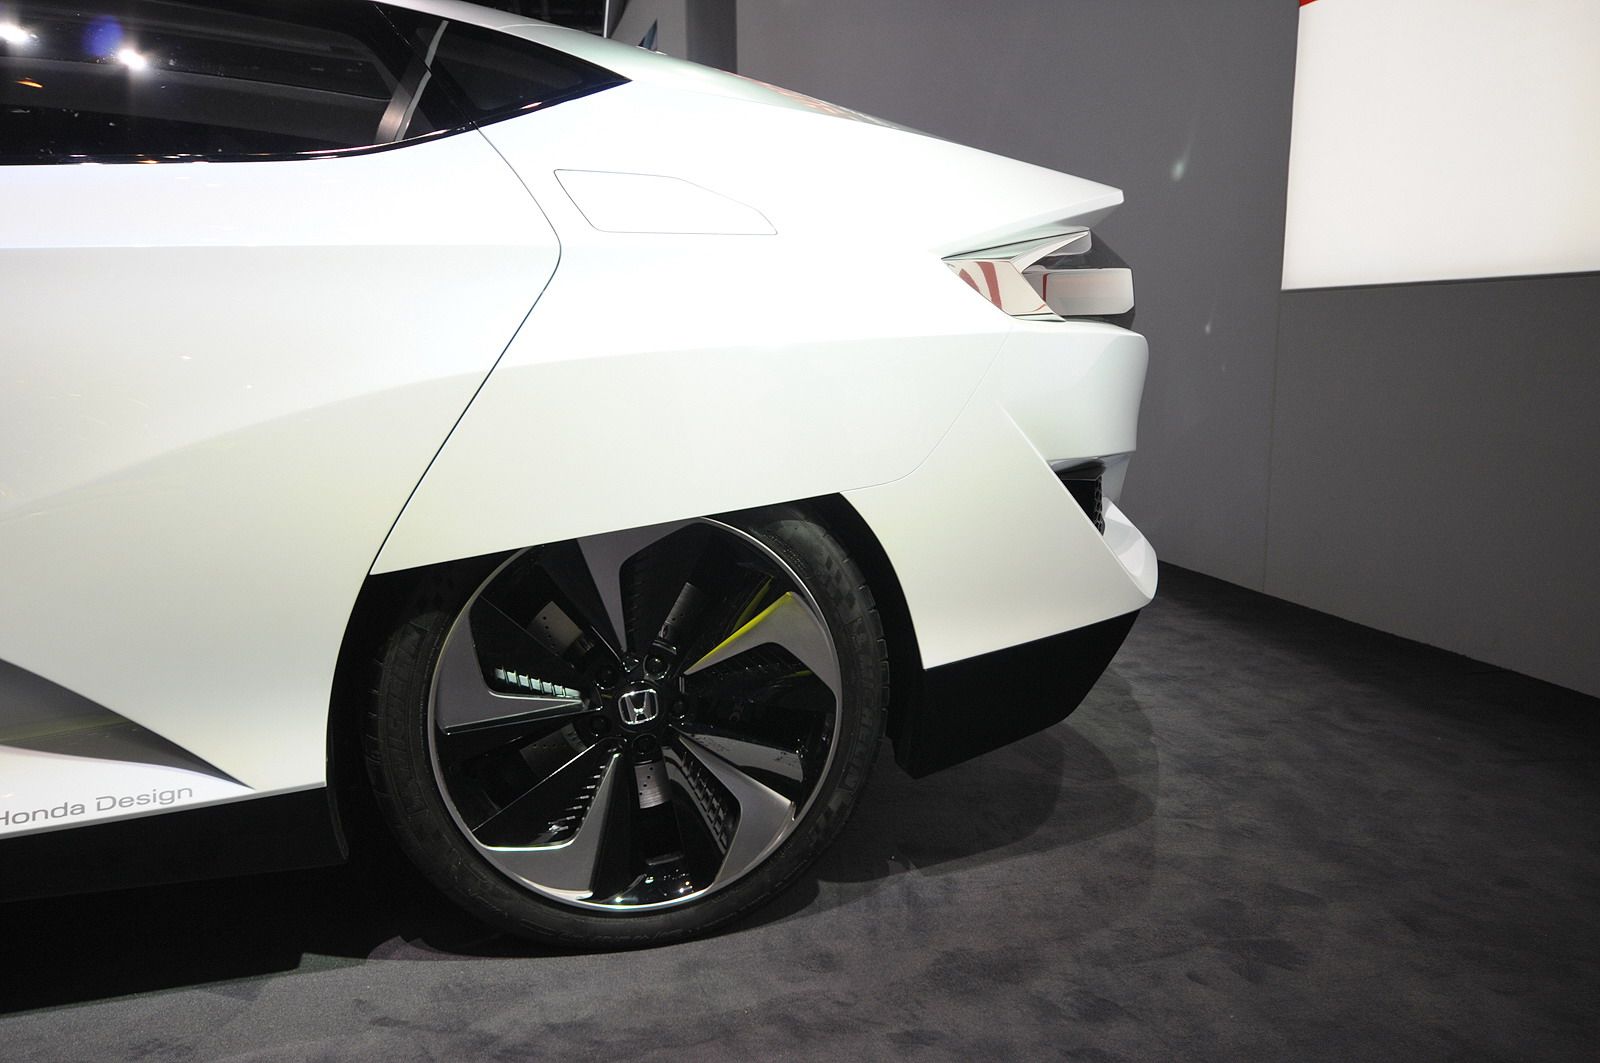 2014 Honda FCV Concept